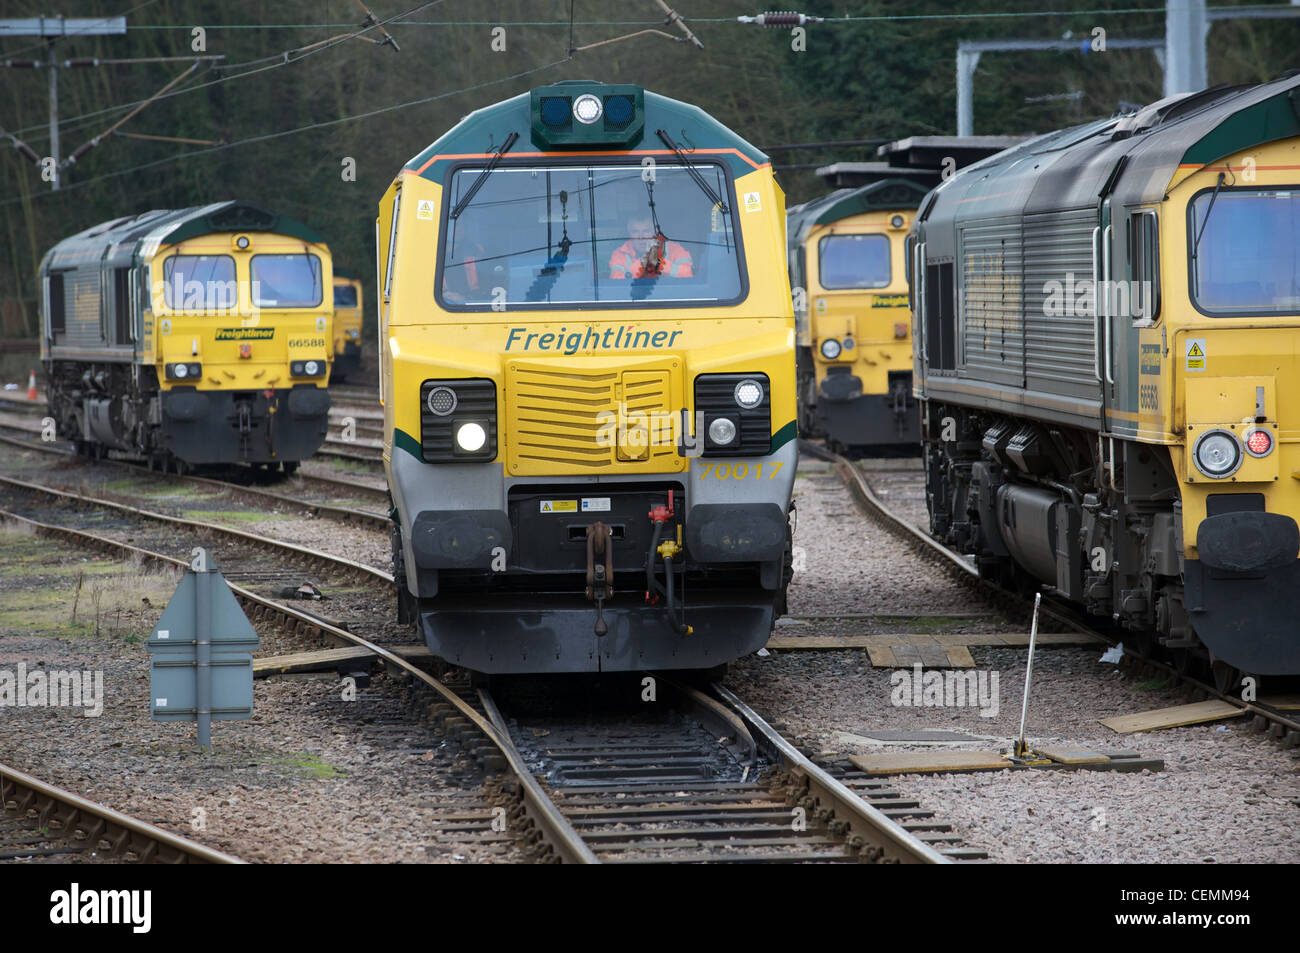 Freightliner locomotive terminal UK Stock Photo